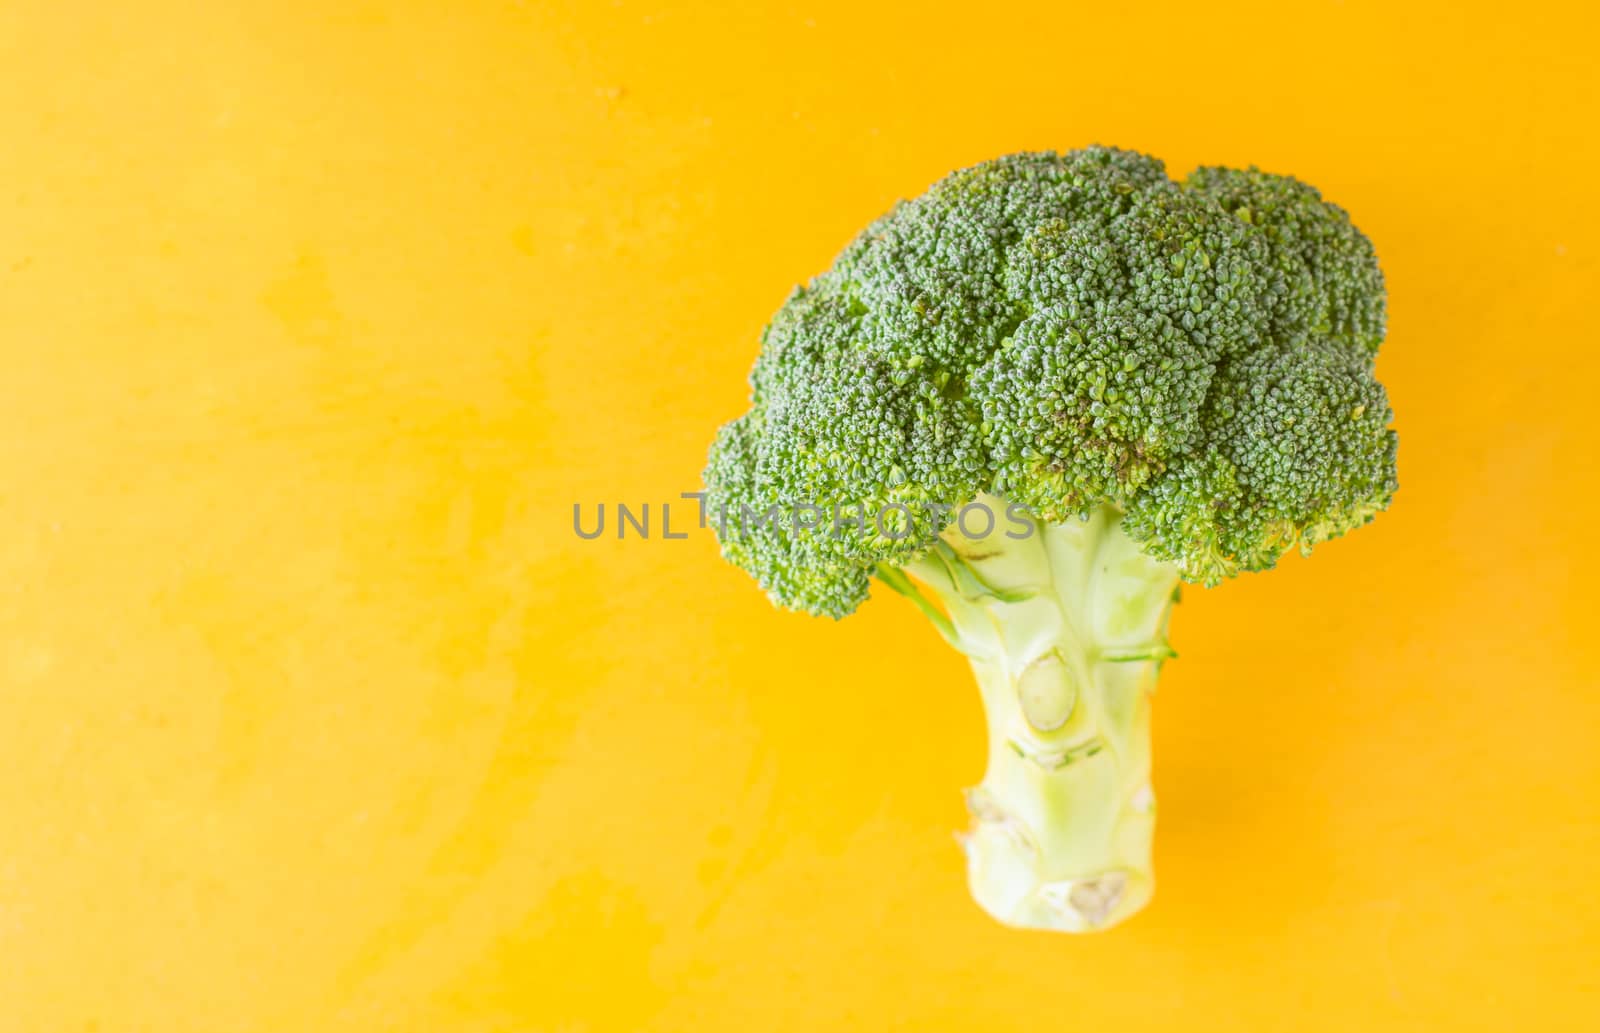 Broccoli on a yellow background by Deniskarpenkov